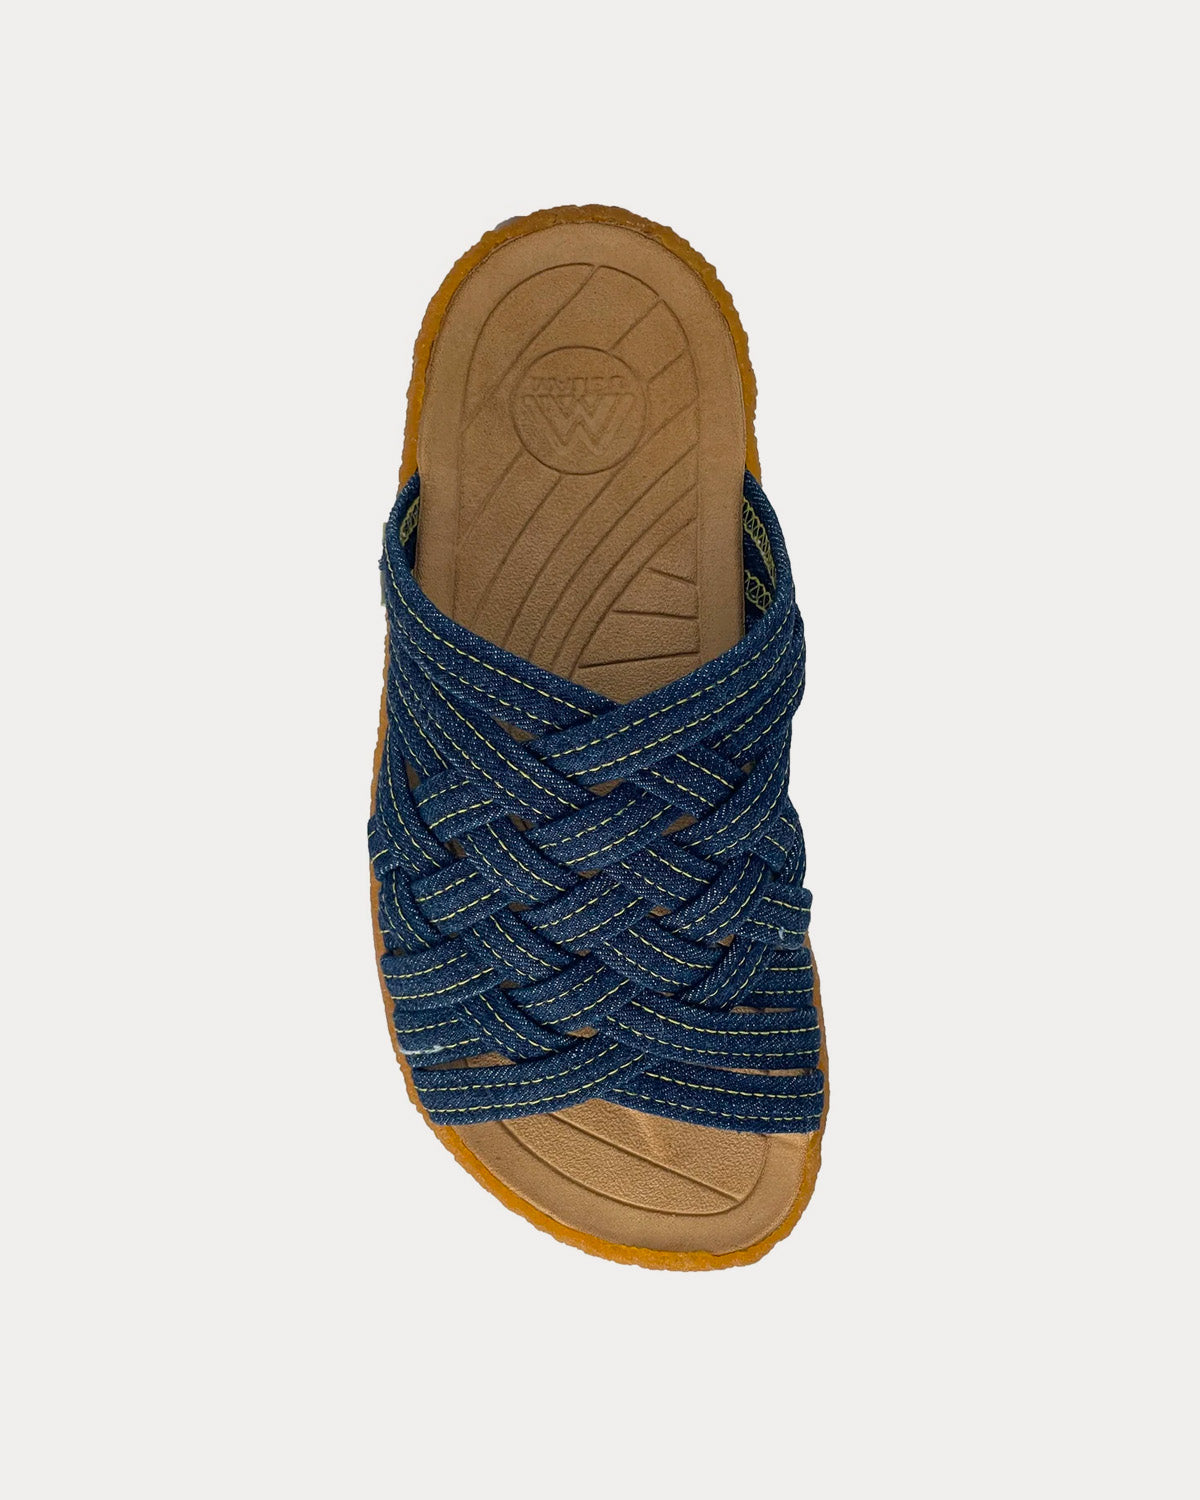 Malibu Sandals x orSlow - Zuma Indigo Blue Denim Sandals